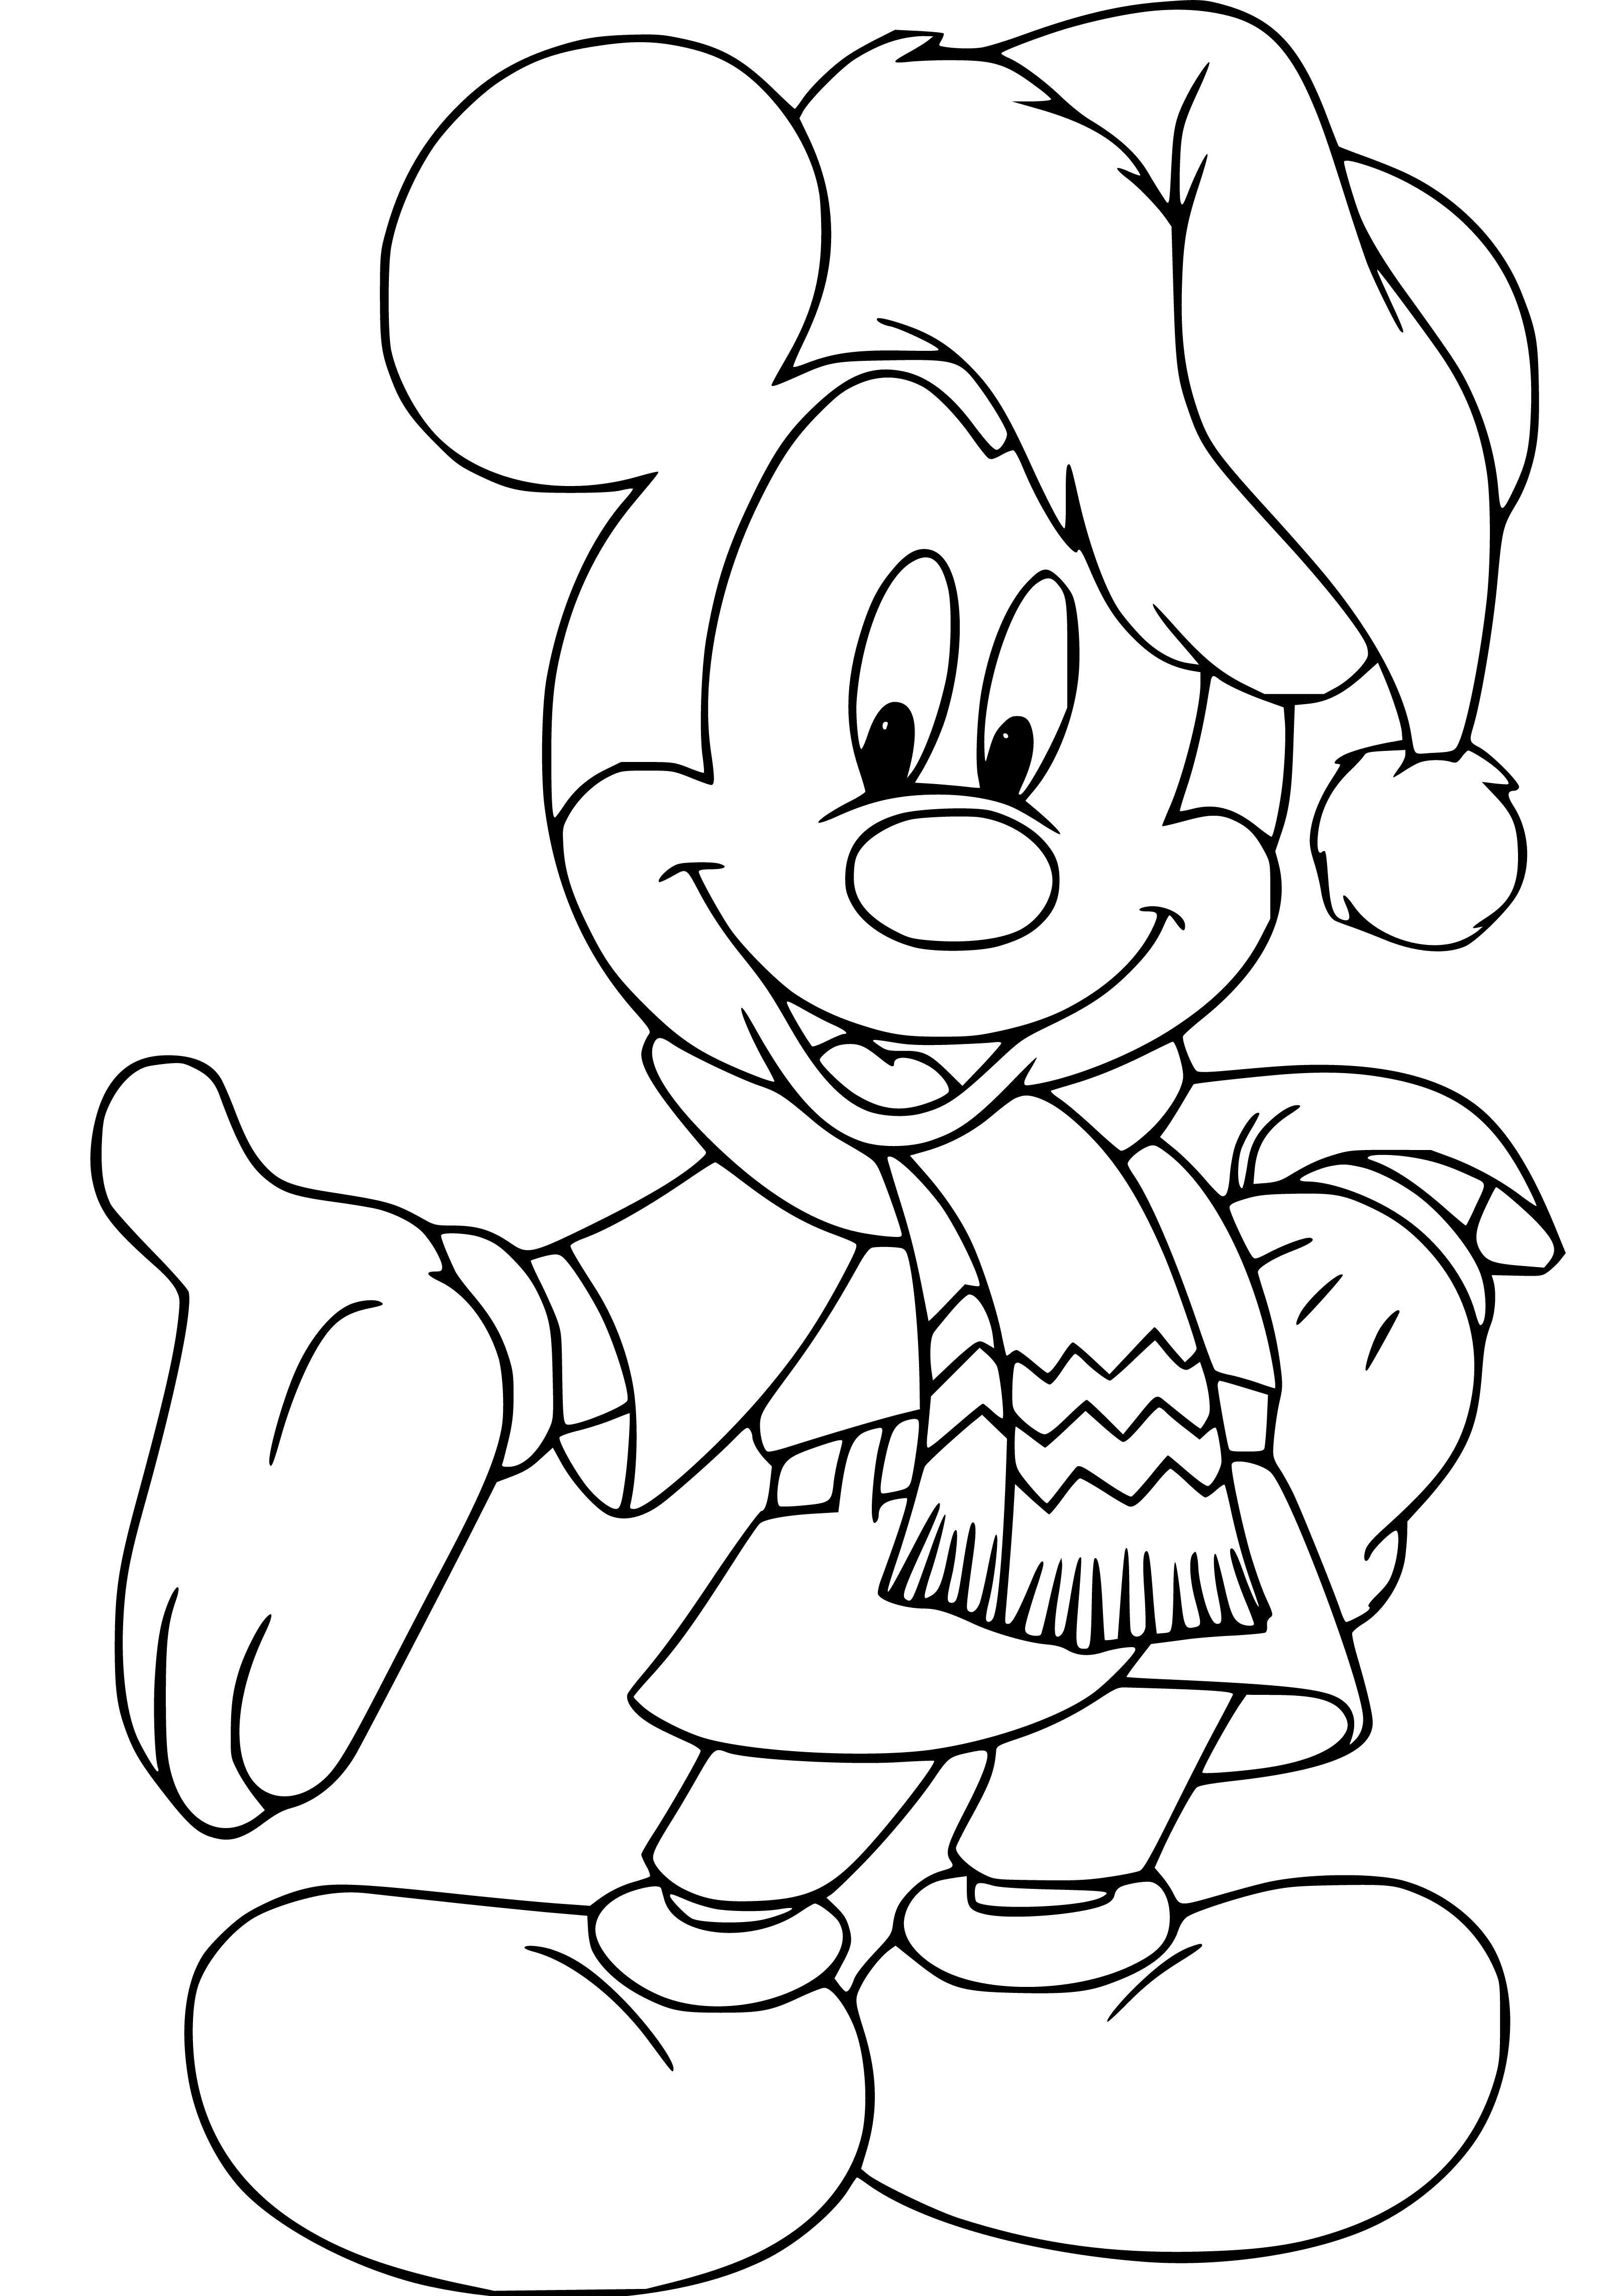 Mickey Mouse Christmas Coloring Page - SheetalColor.com